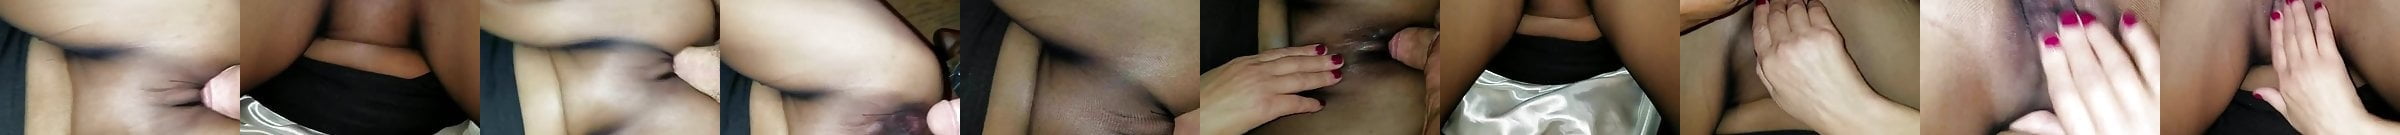 Seamless Pantyhose Porn Videos Xhamster